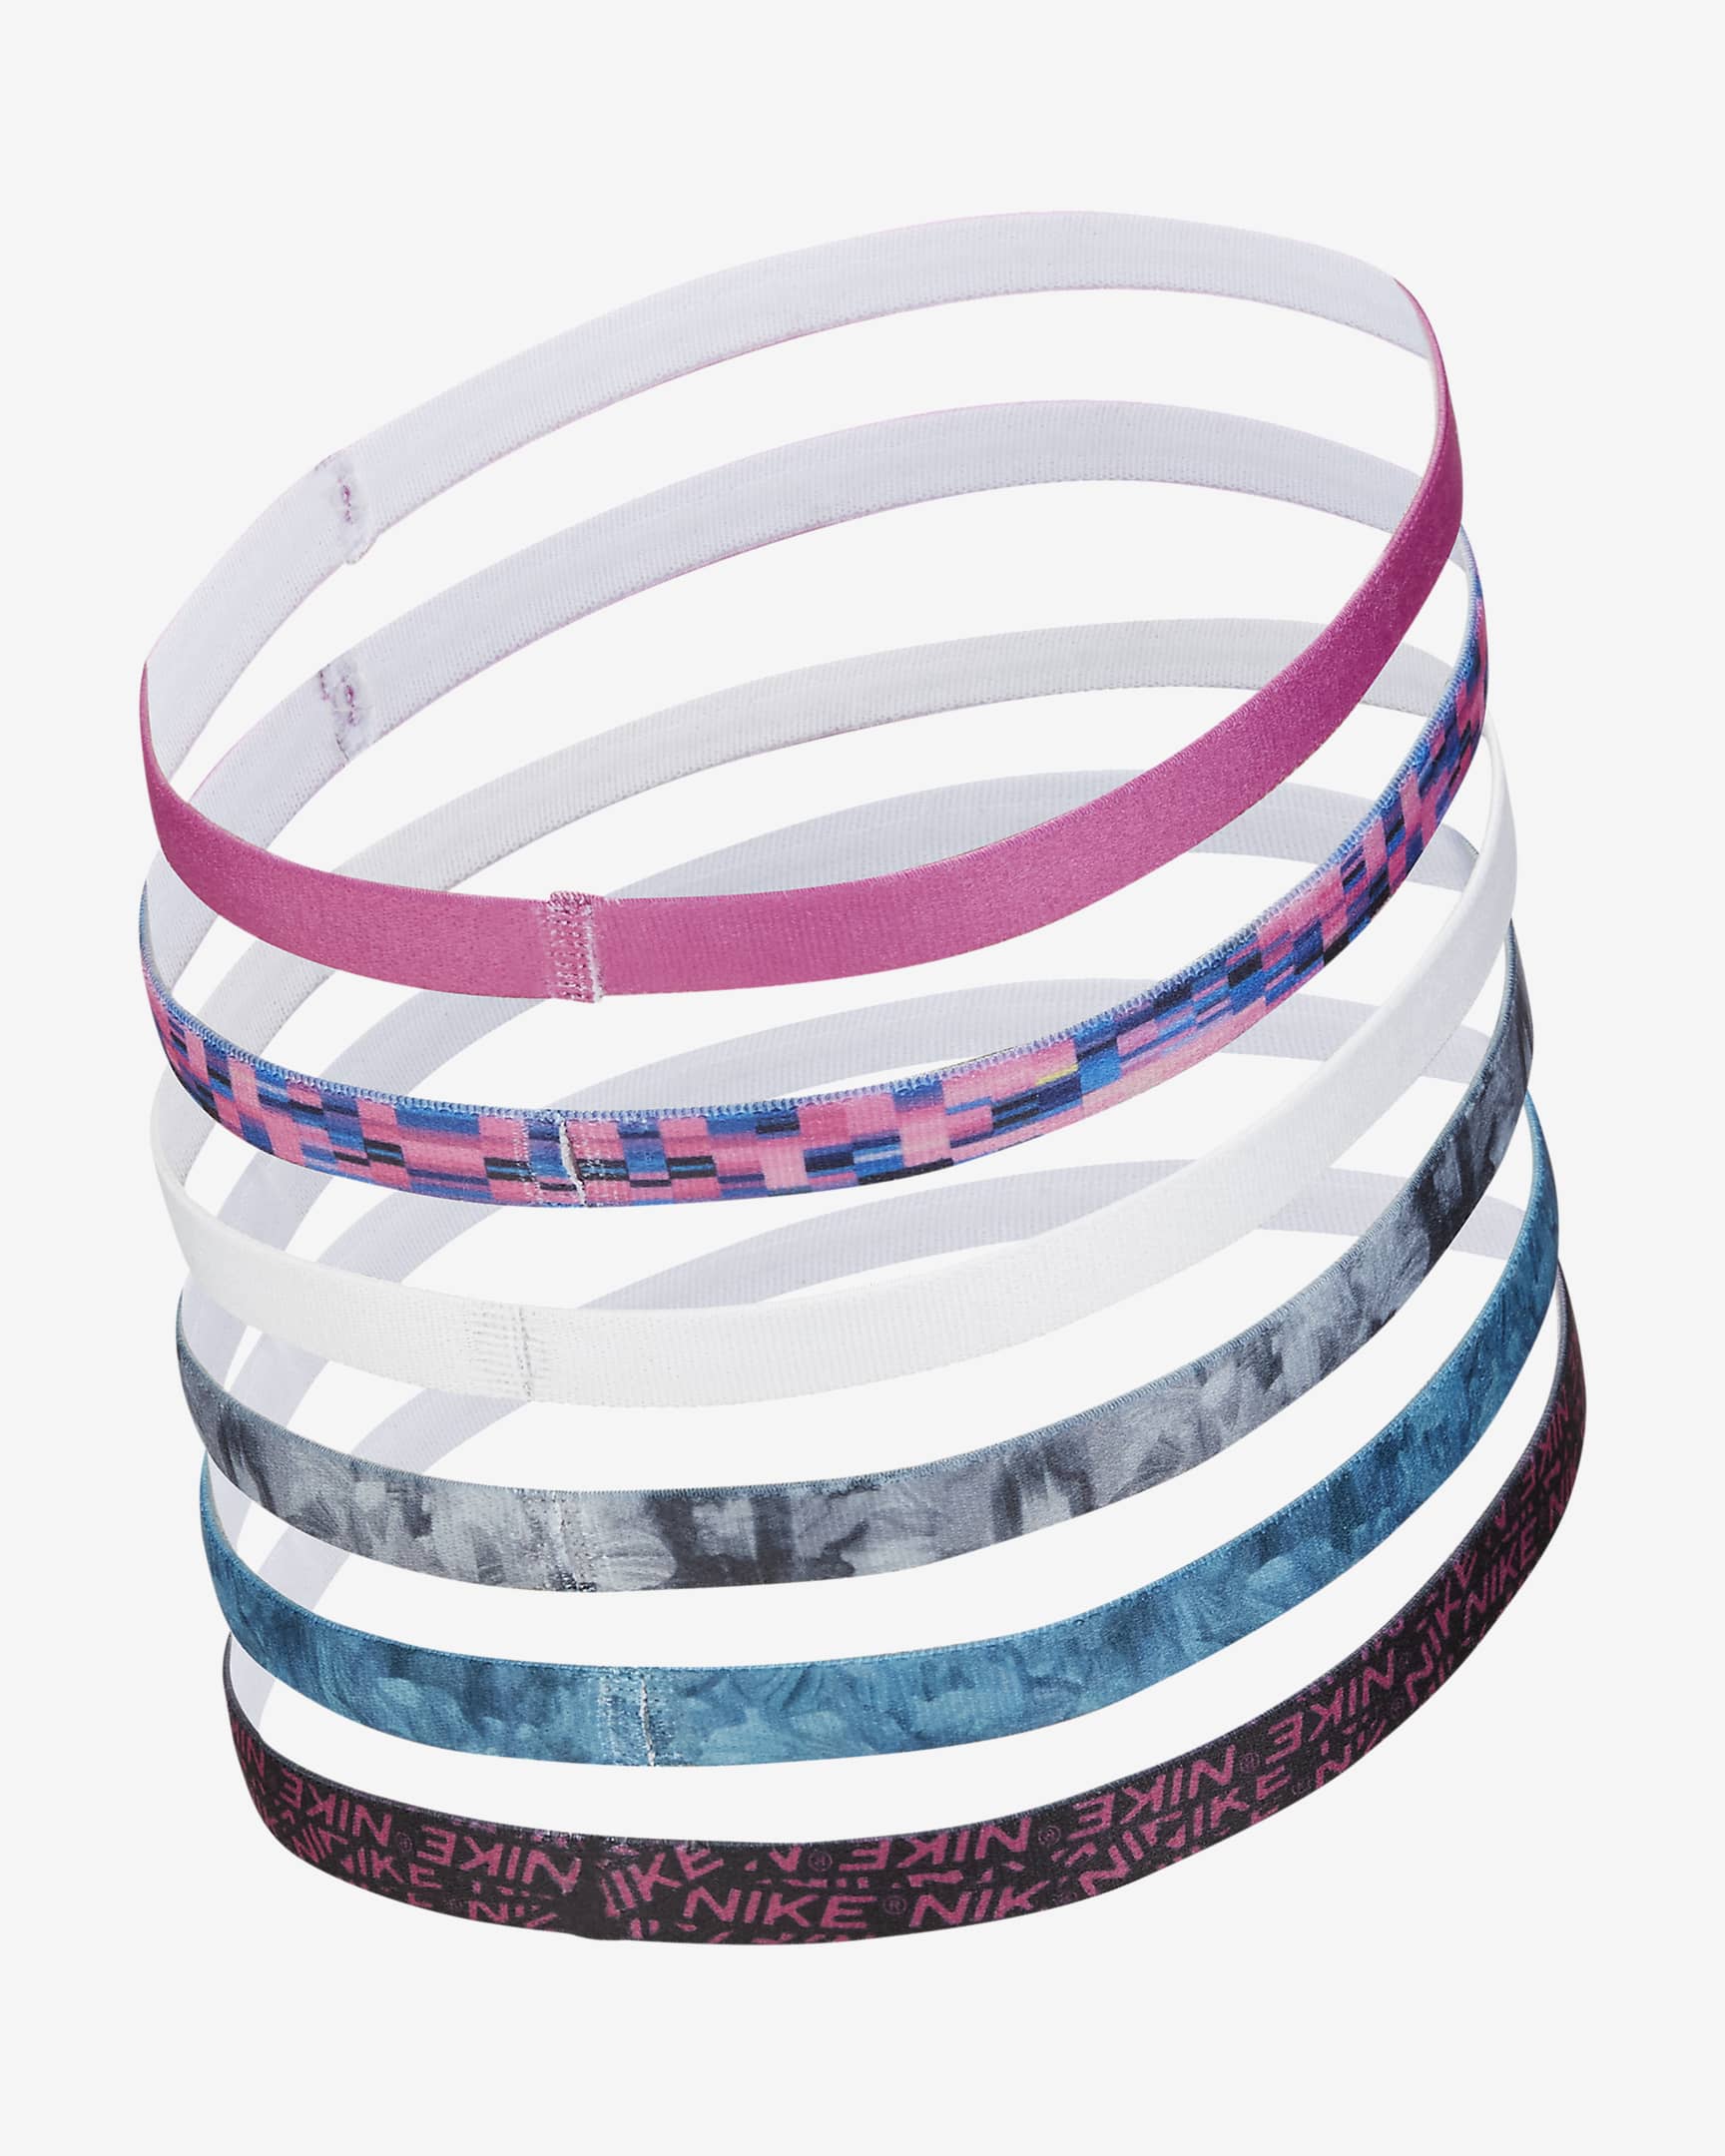 Nike Printed Headbands (6 Pack) - Active Fuchsia/Photon Dust/Cosmic Fuchsia